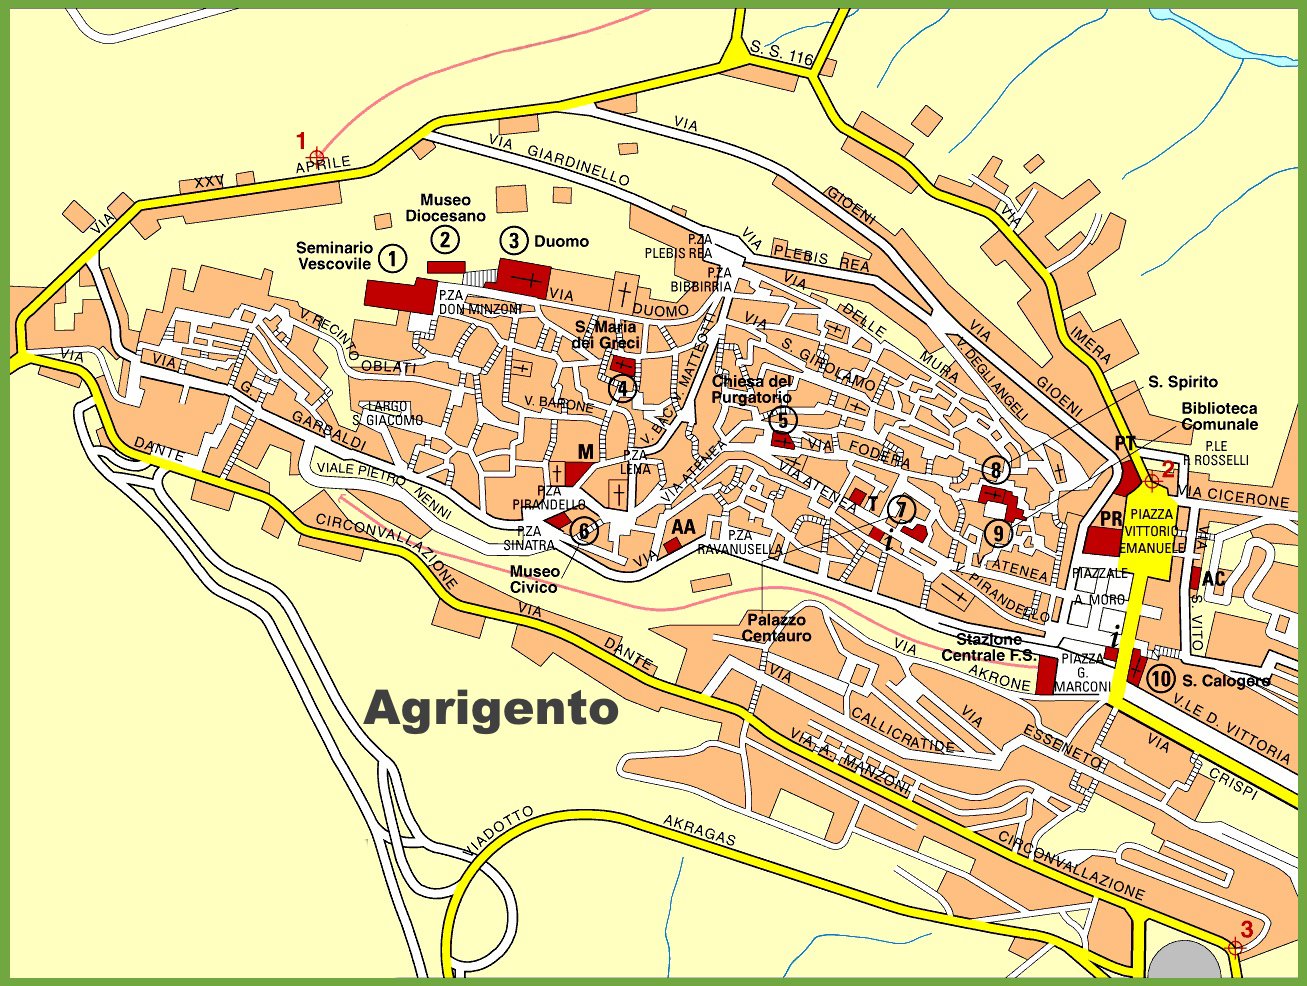 Centro histórico visita -Agrigento en Sicilia - Agrigento: Valle de los Templos (V. dei Templi) - Sicilia - Foro Italia